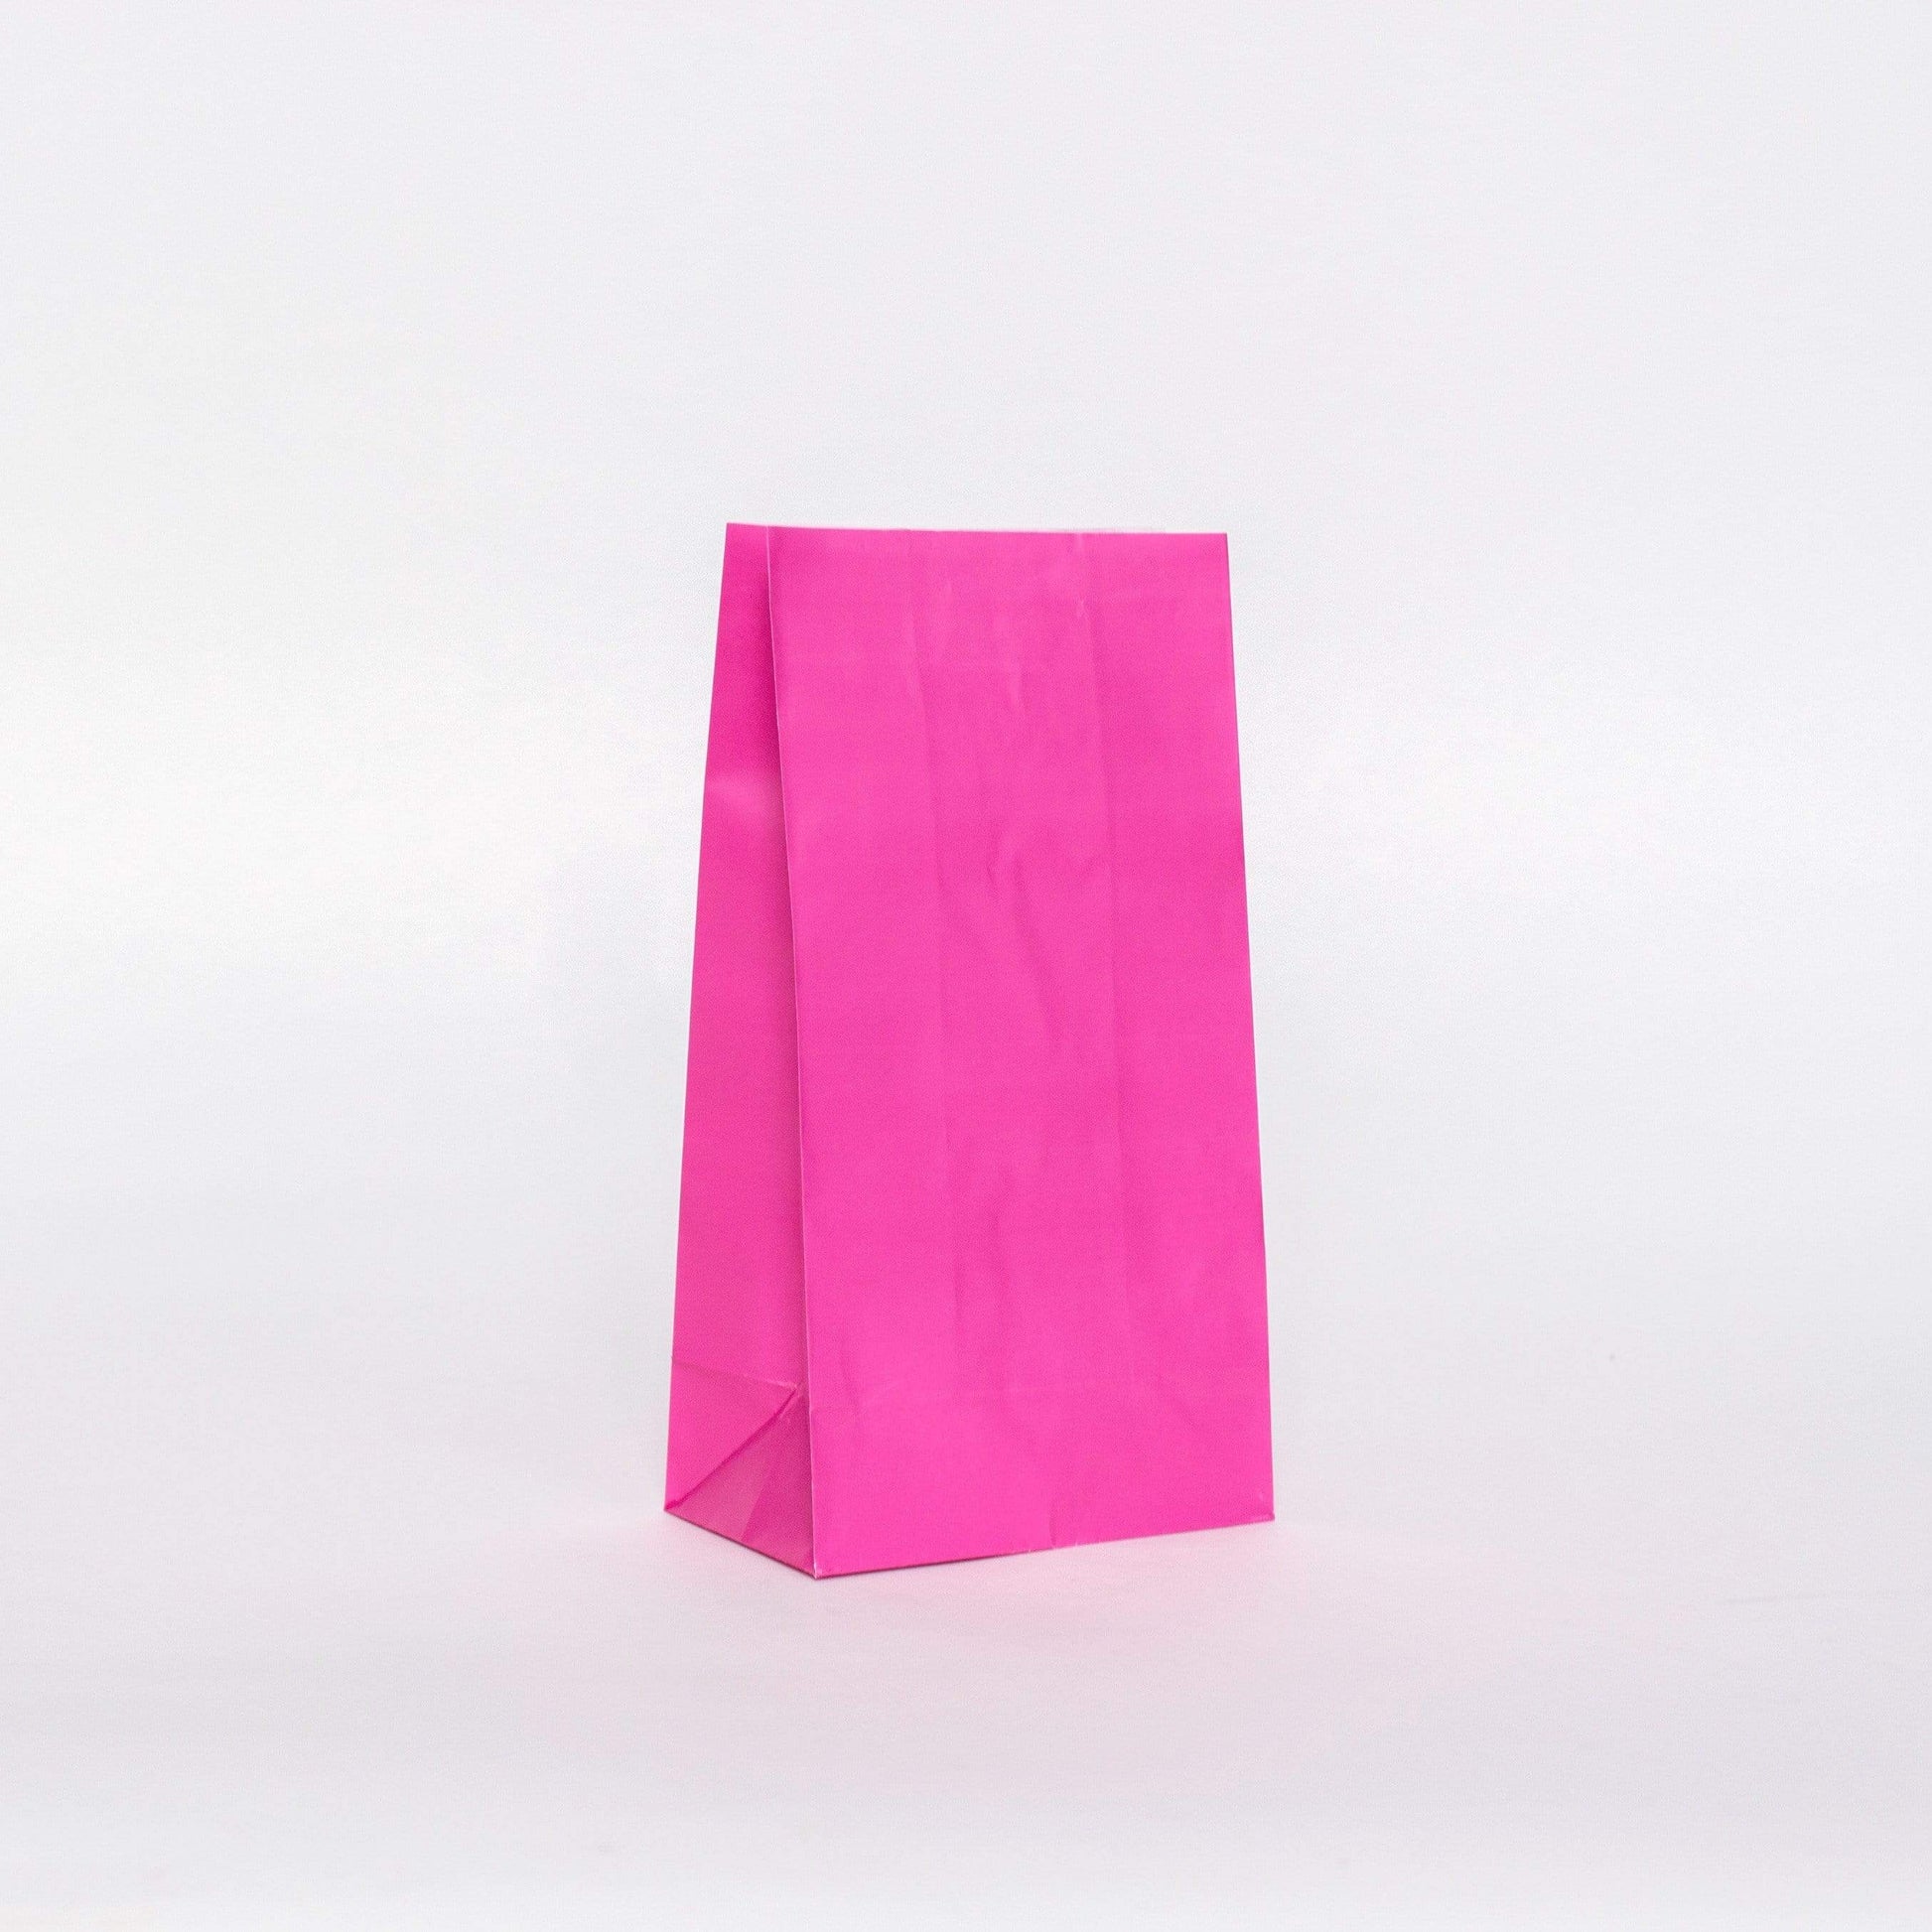 Pink Party Bags | Solid Colour Paper Bags | Treat Bags  Unique